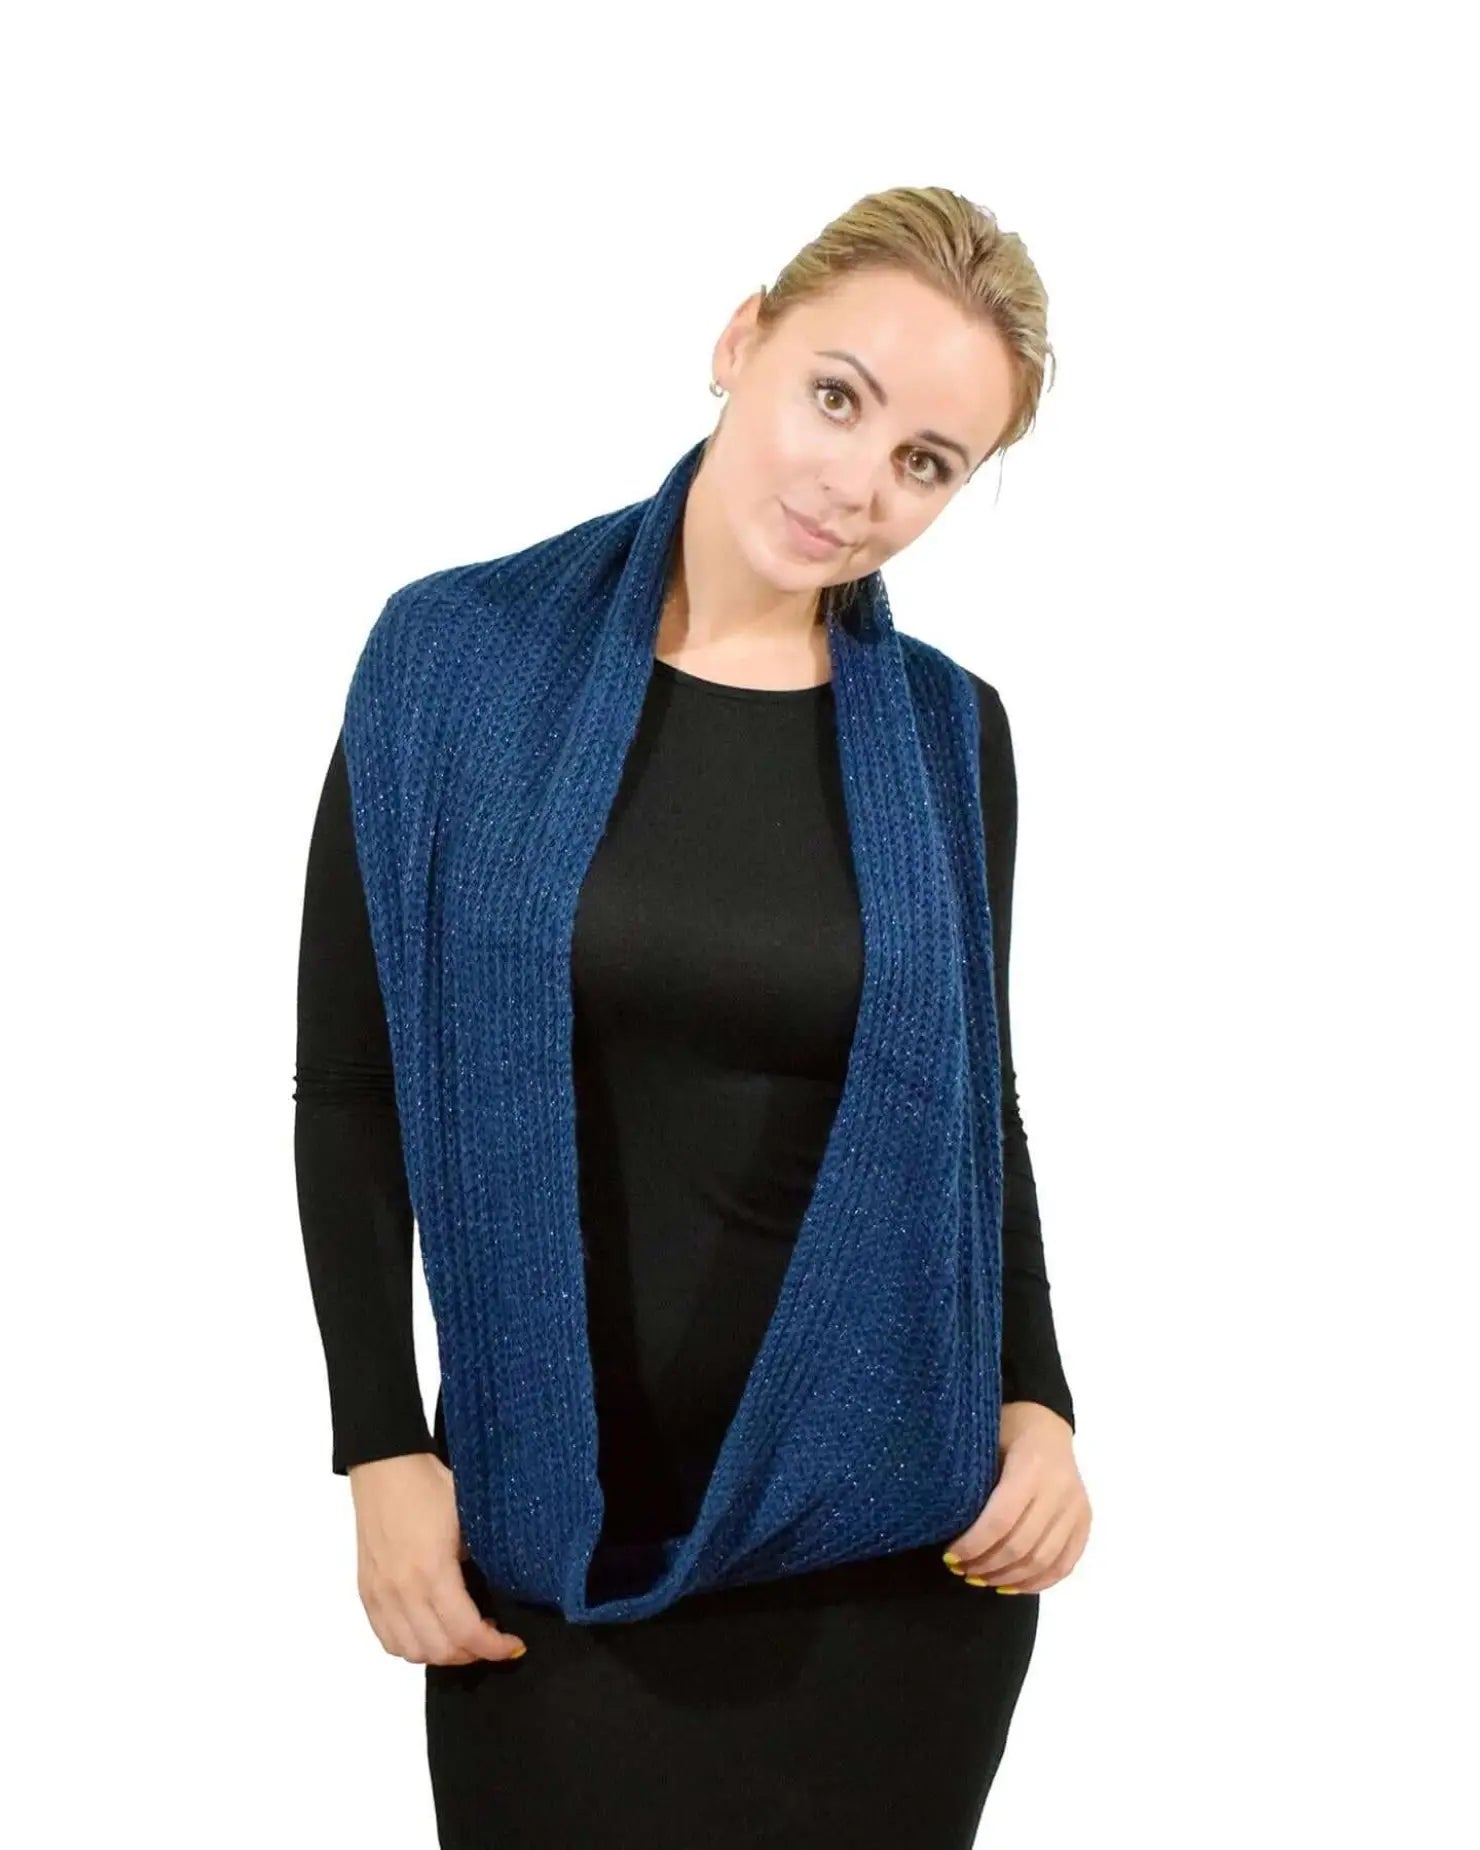 Woman wearing blue knit scarf from Glitter Knit Snood: Stylish Winter Infinity Scarf.